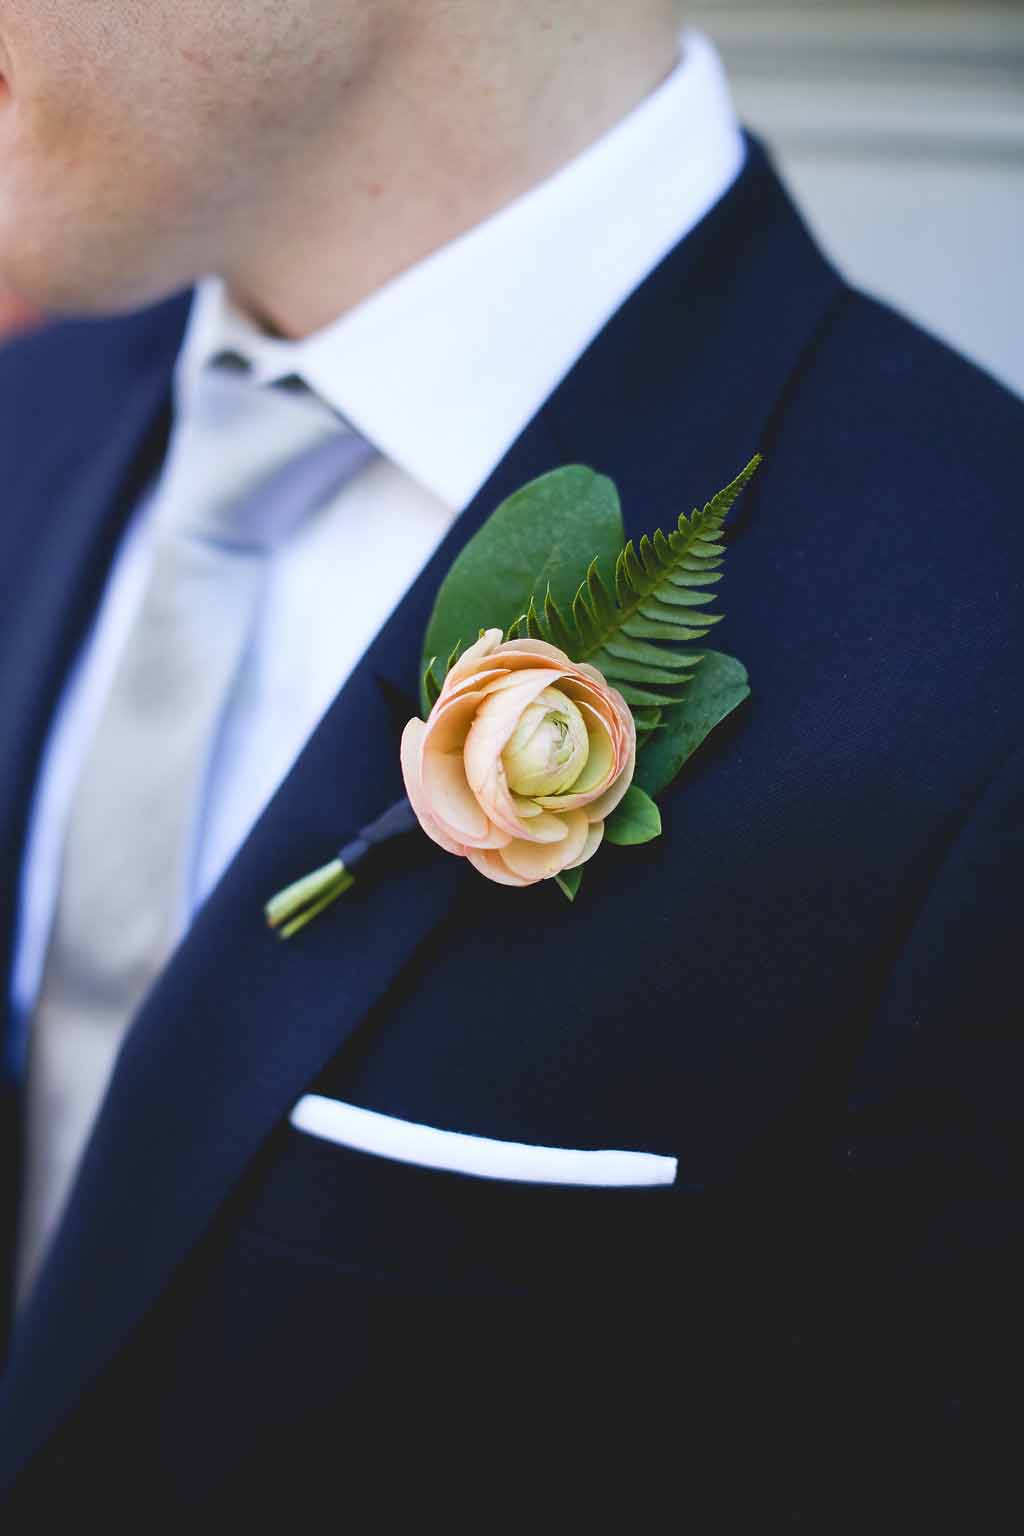 Bella Fiori, Seattle Wedding Florist, Fairmont Olympic Hotel - Groom's Boutonniere of a Peach Ranunculus